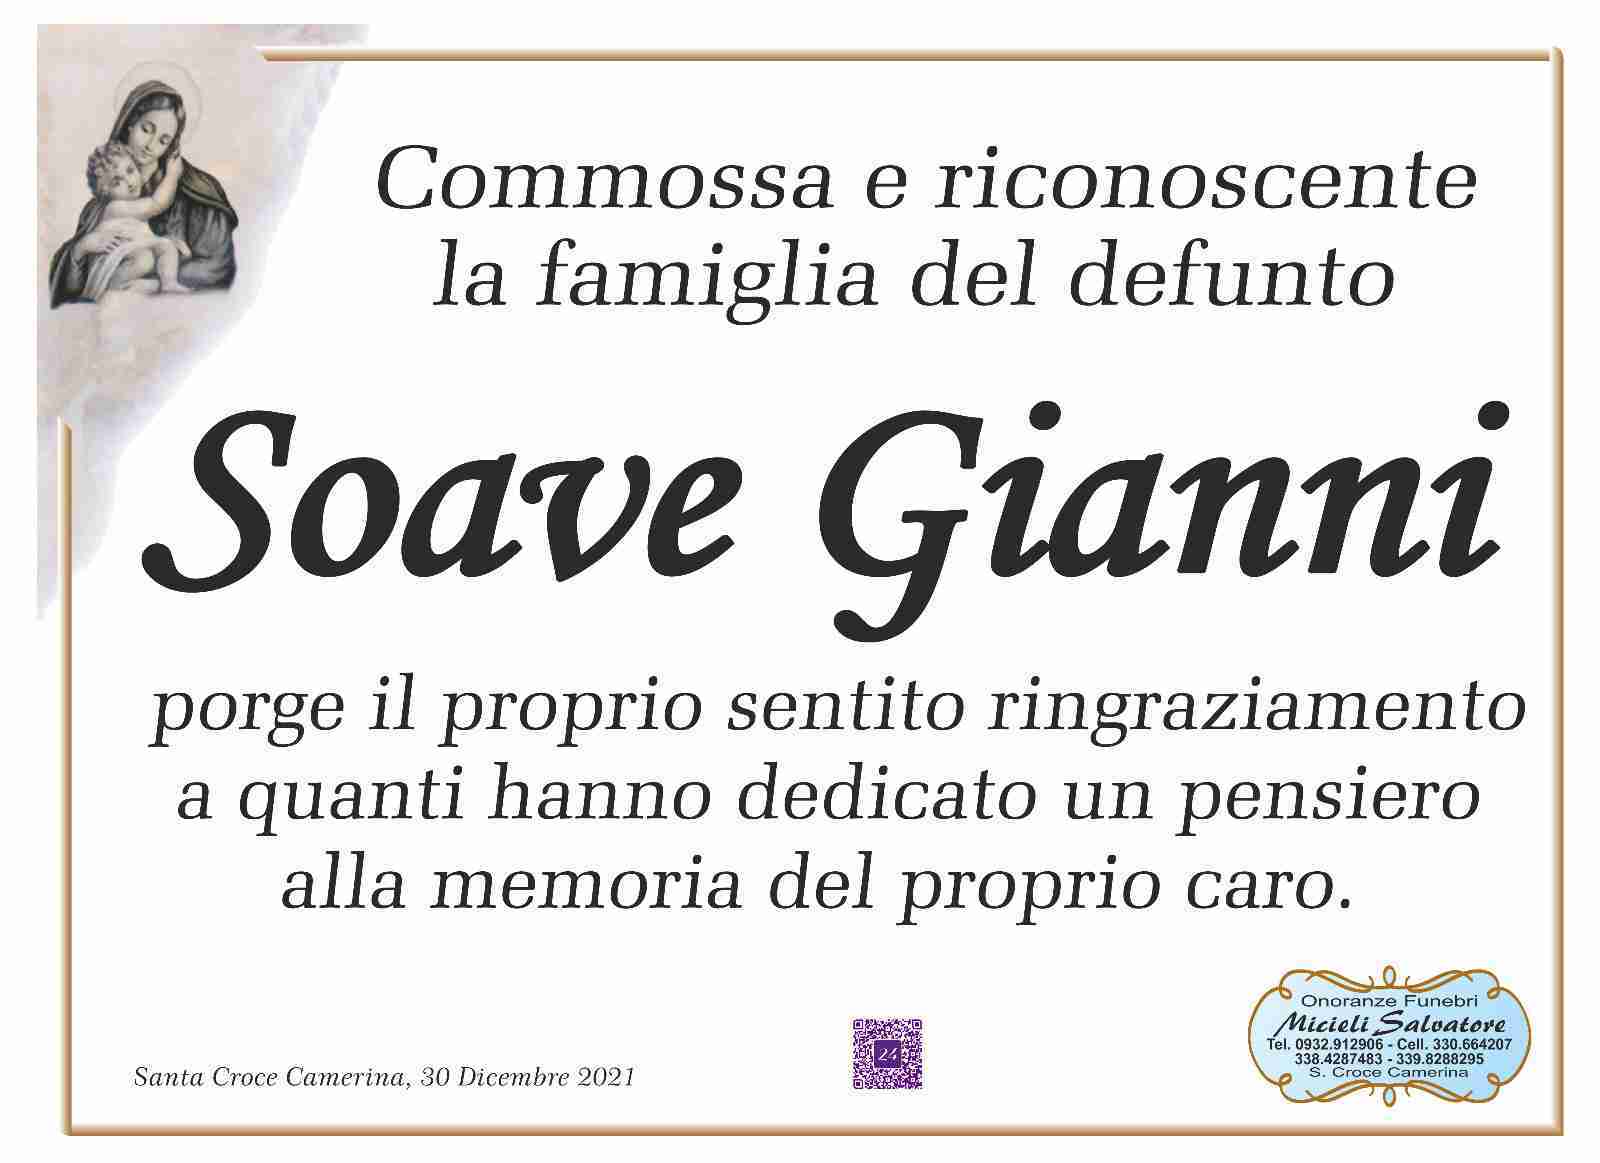 Gianni Soave